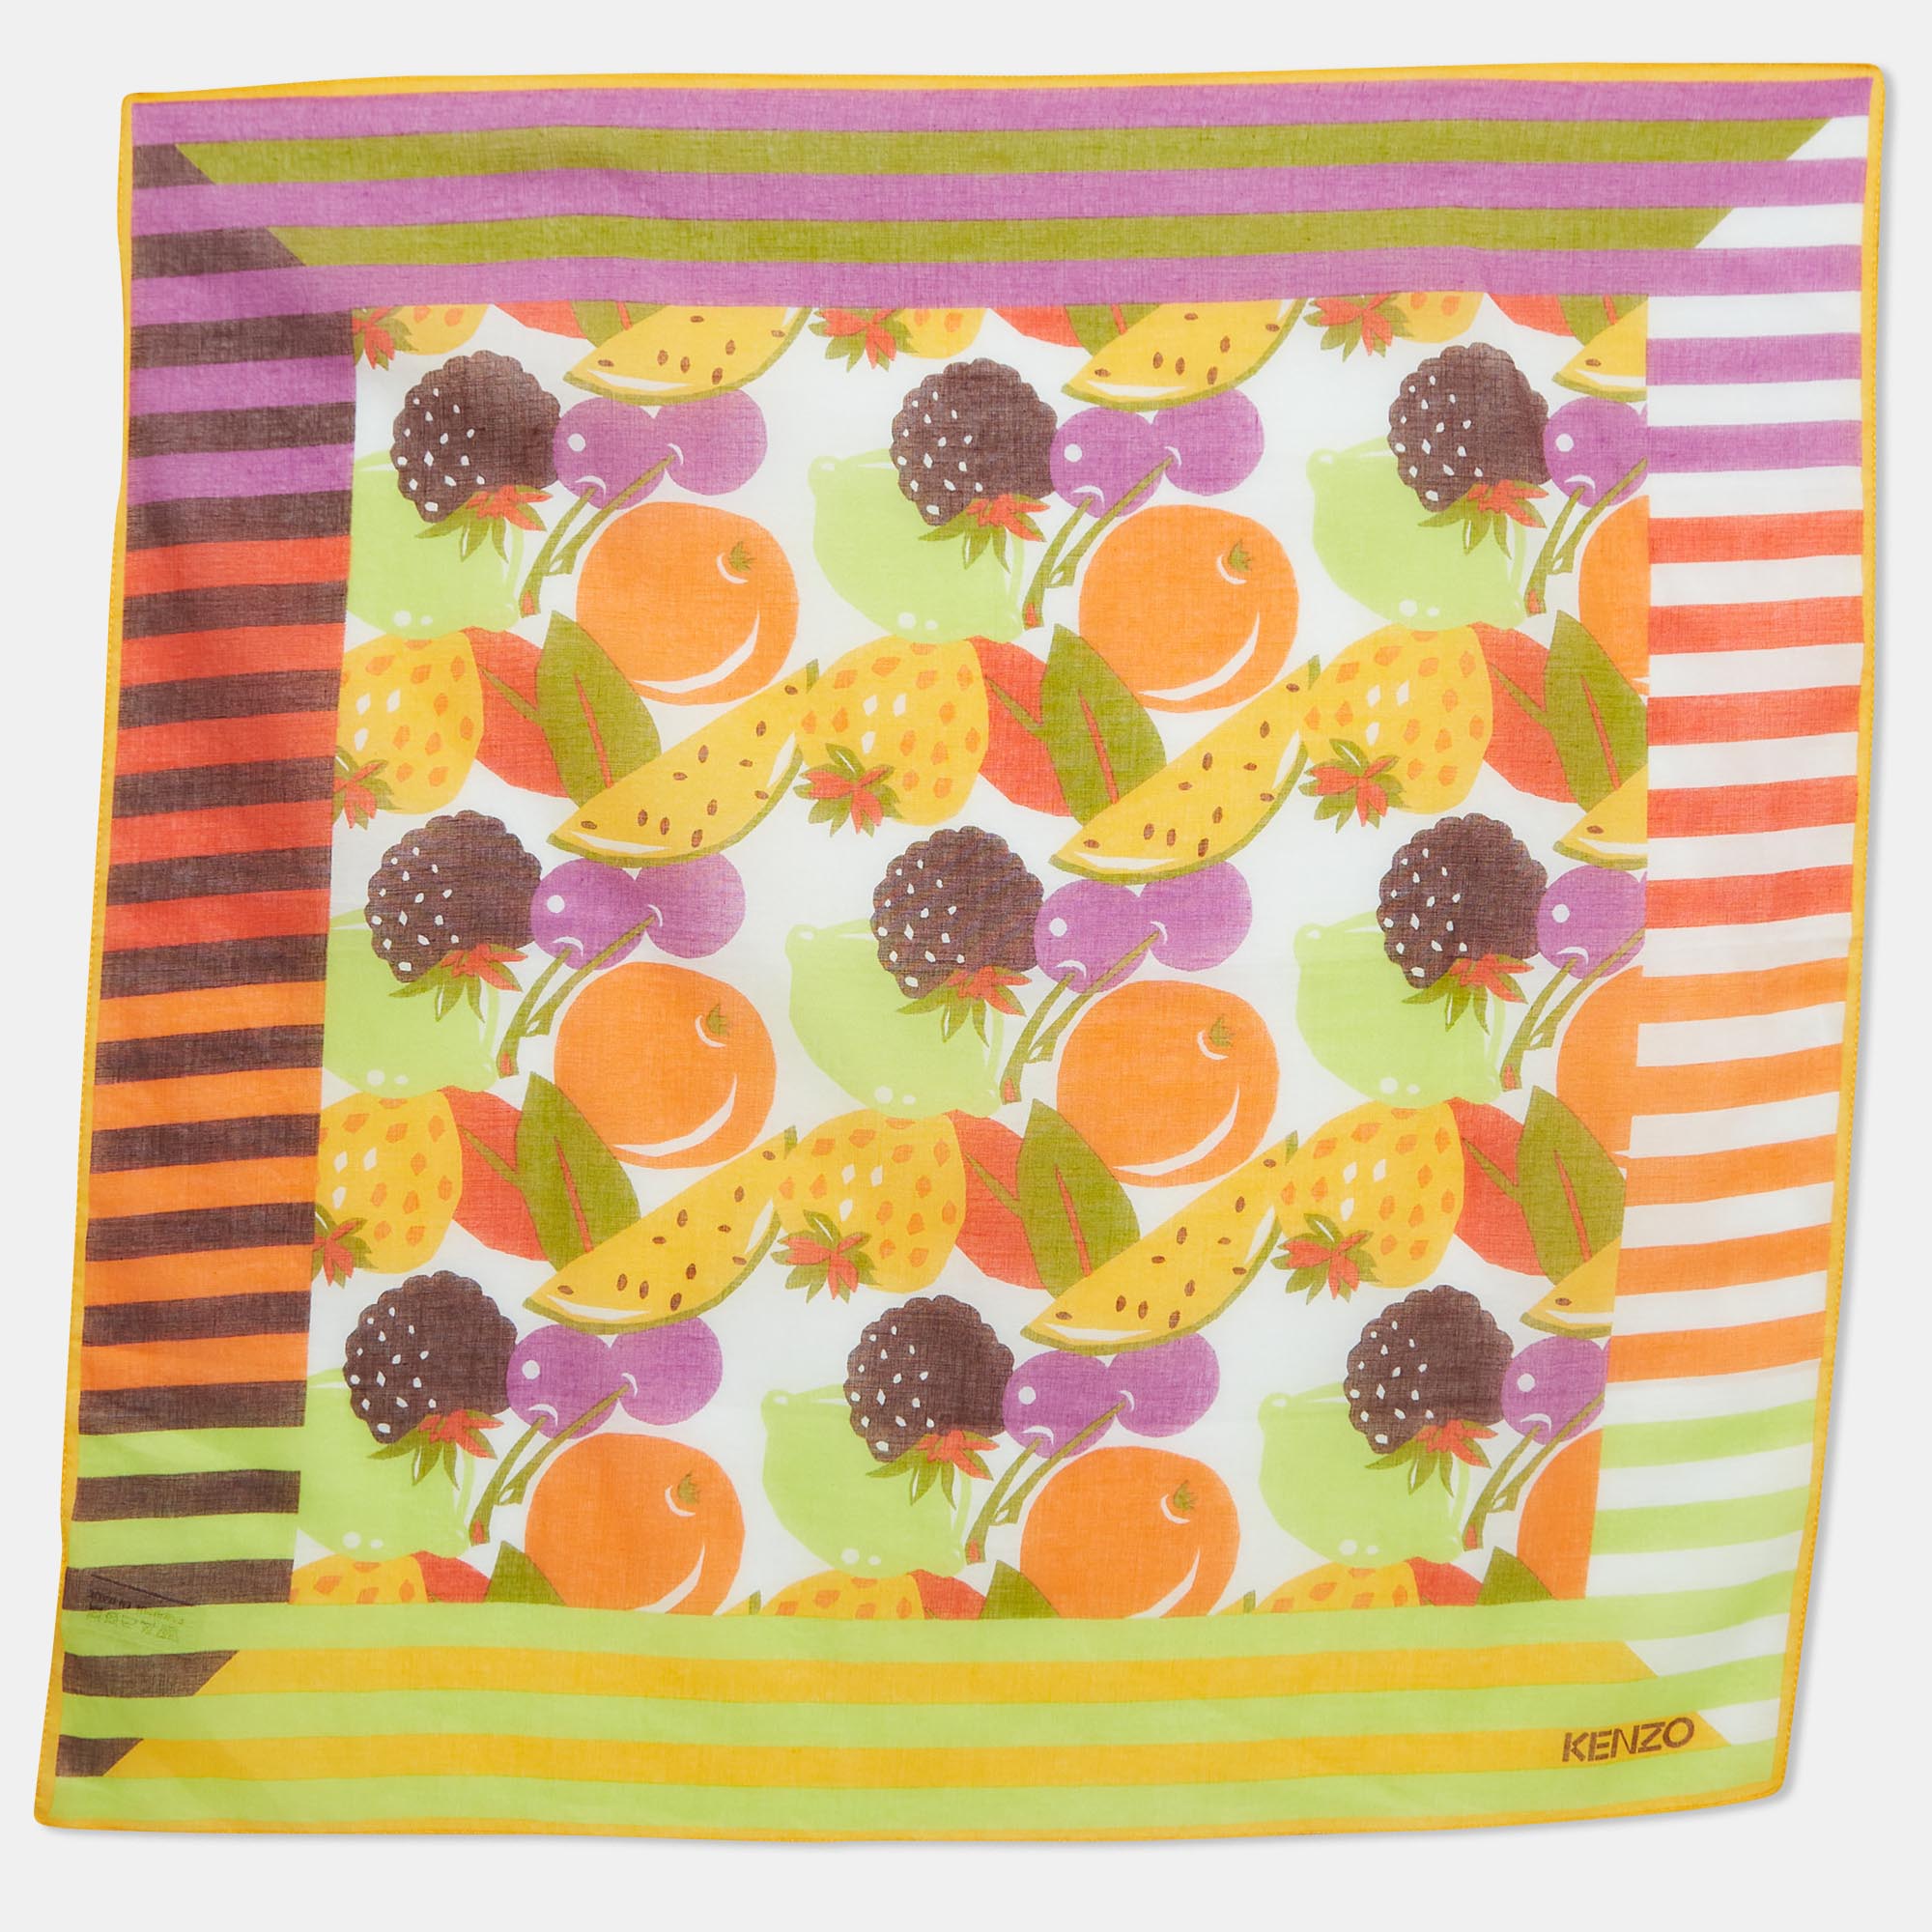 

Kenzo Multicolor Fruits Print Cotton Square Scarf